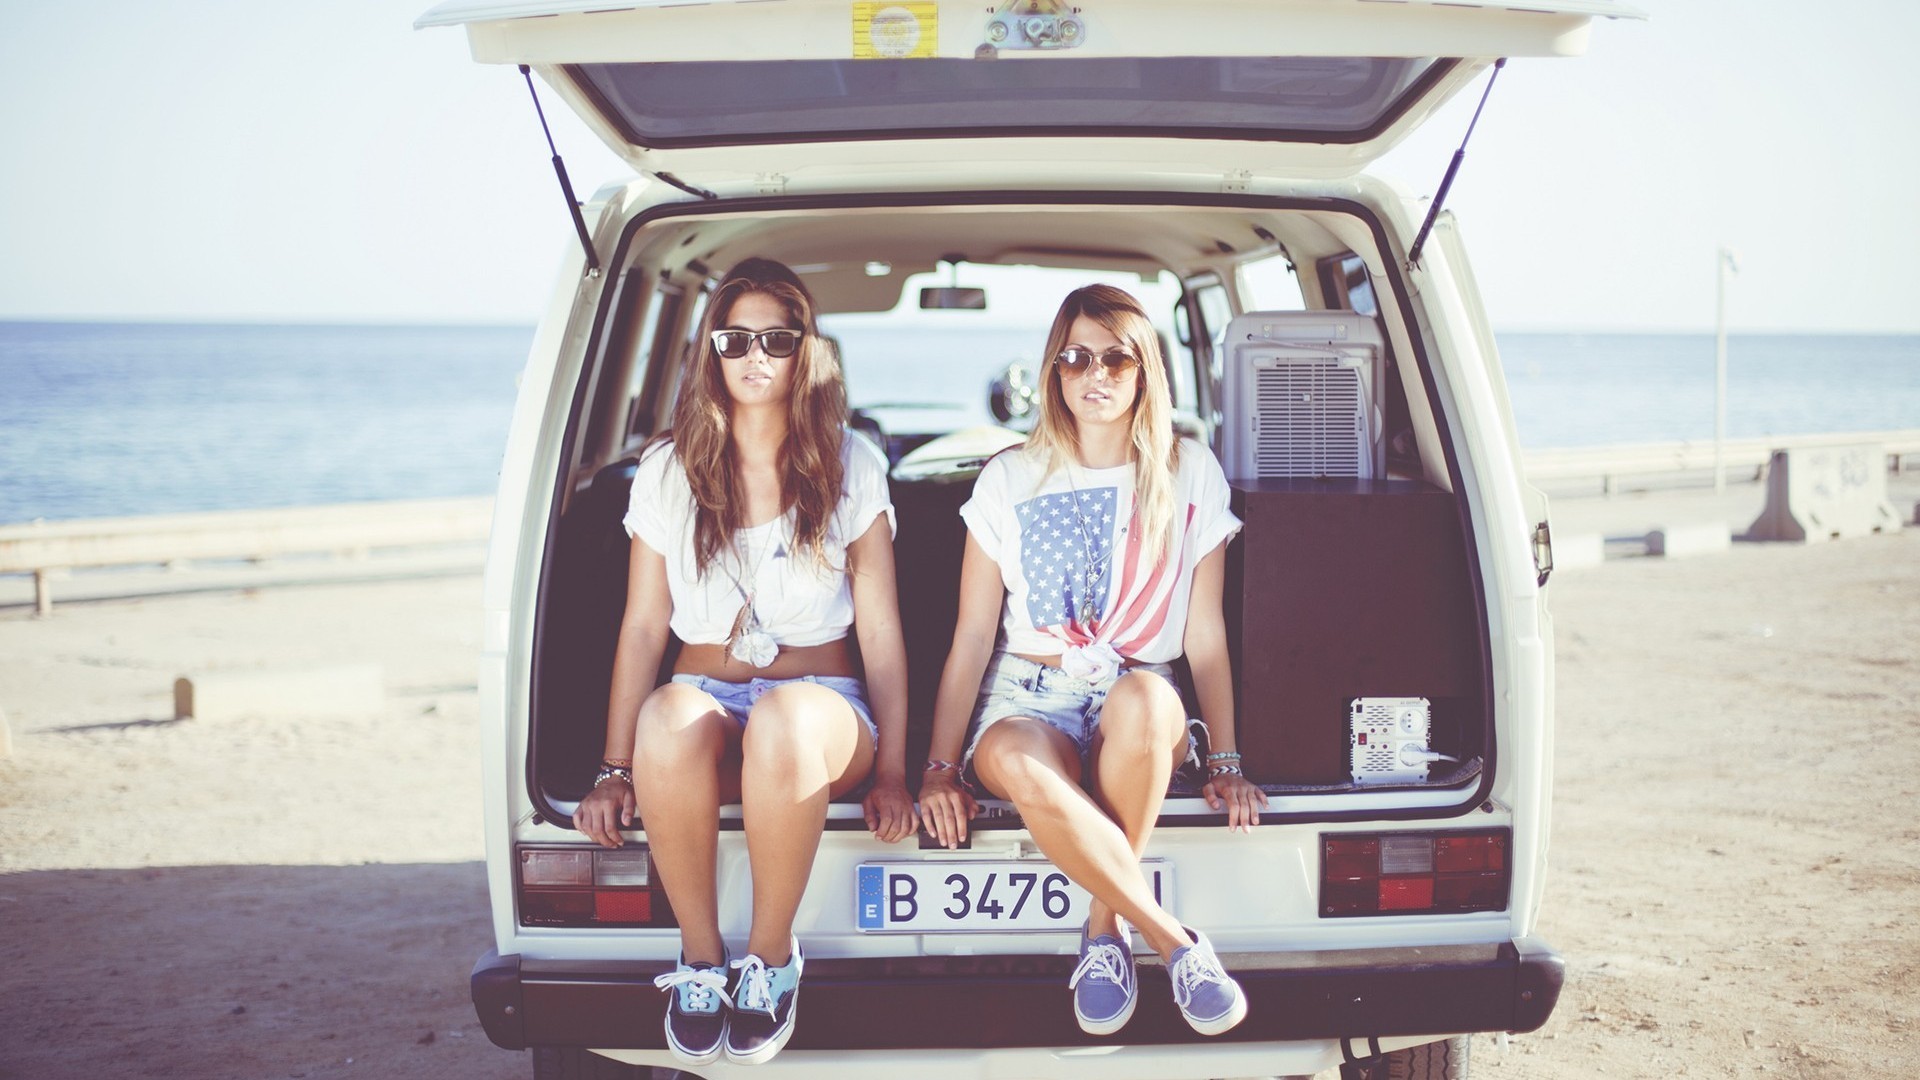 spain beach volkswagen vacations women jean shorts Wallpaper